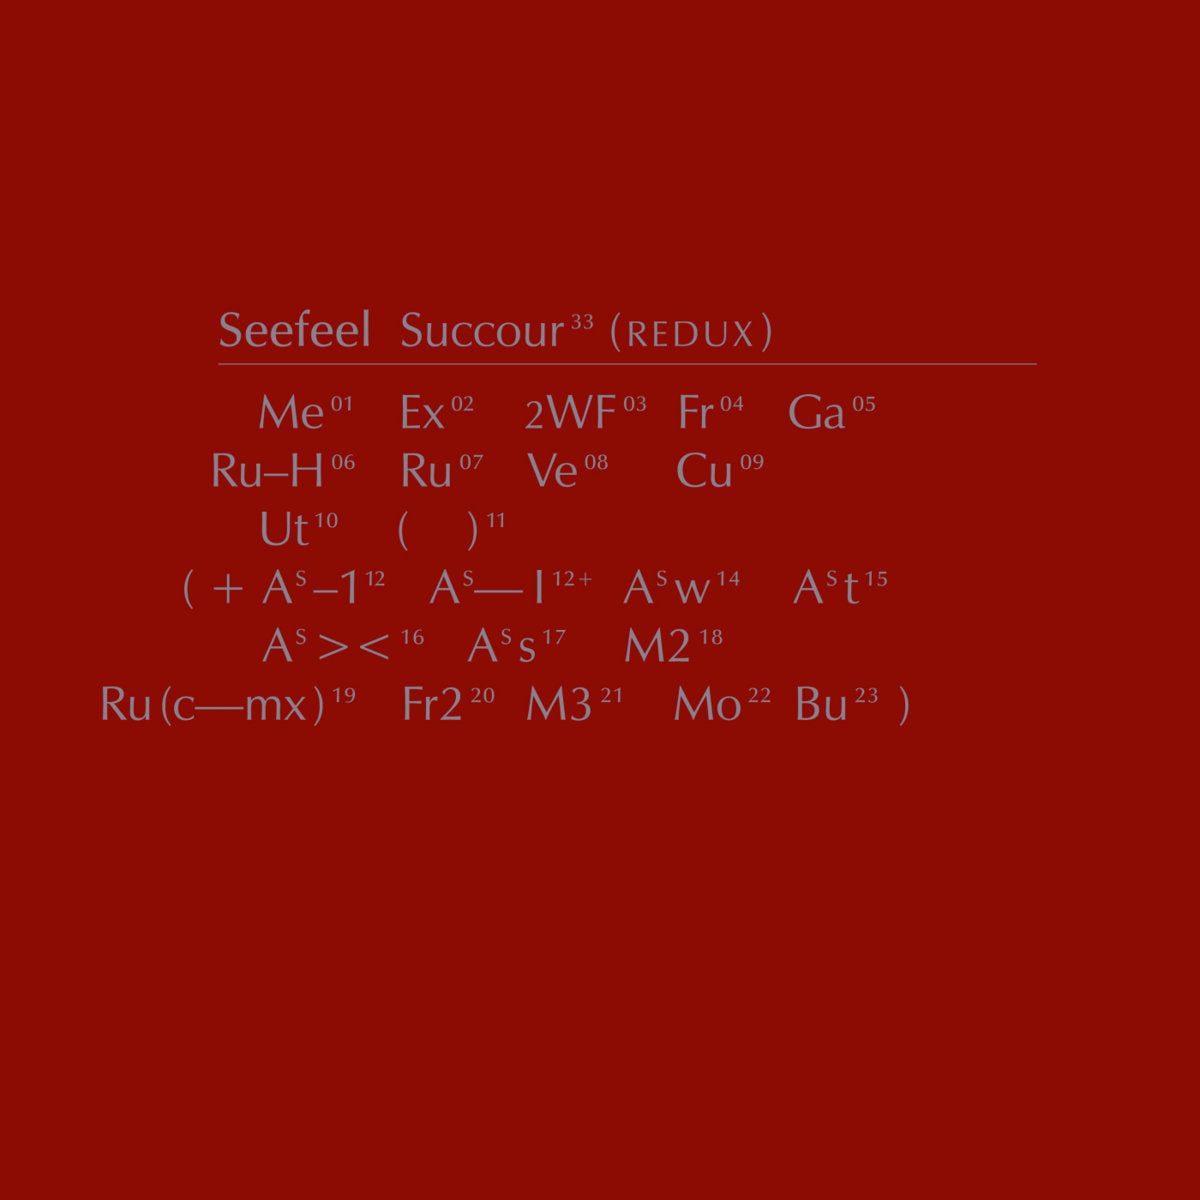 SEEFEEL - Succour (Redux) - 3LP - Gatefold Sleeve Vinyl